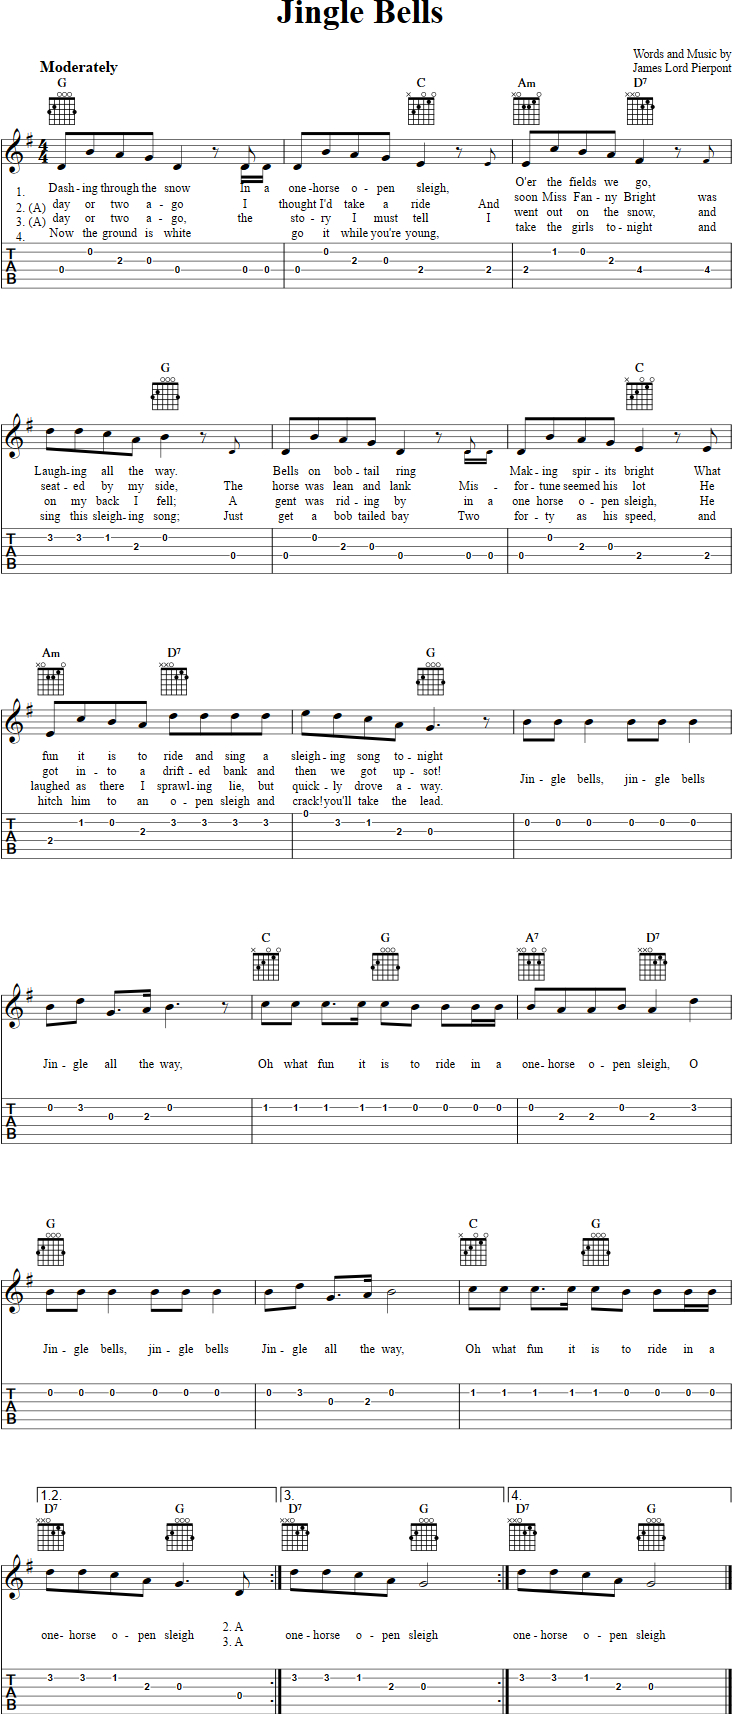 Jingle Bells Chords Jingle Bells Chords Sheet Music And Tab For Guitar With Lyrics